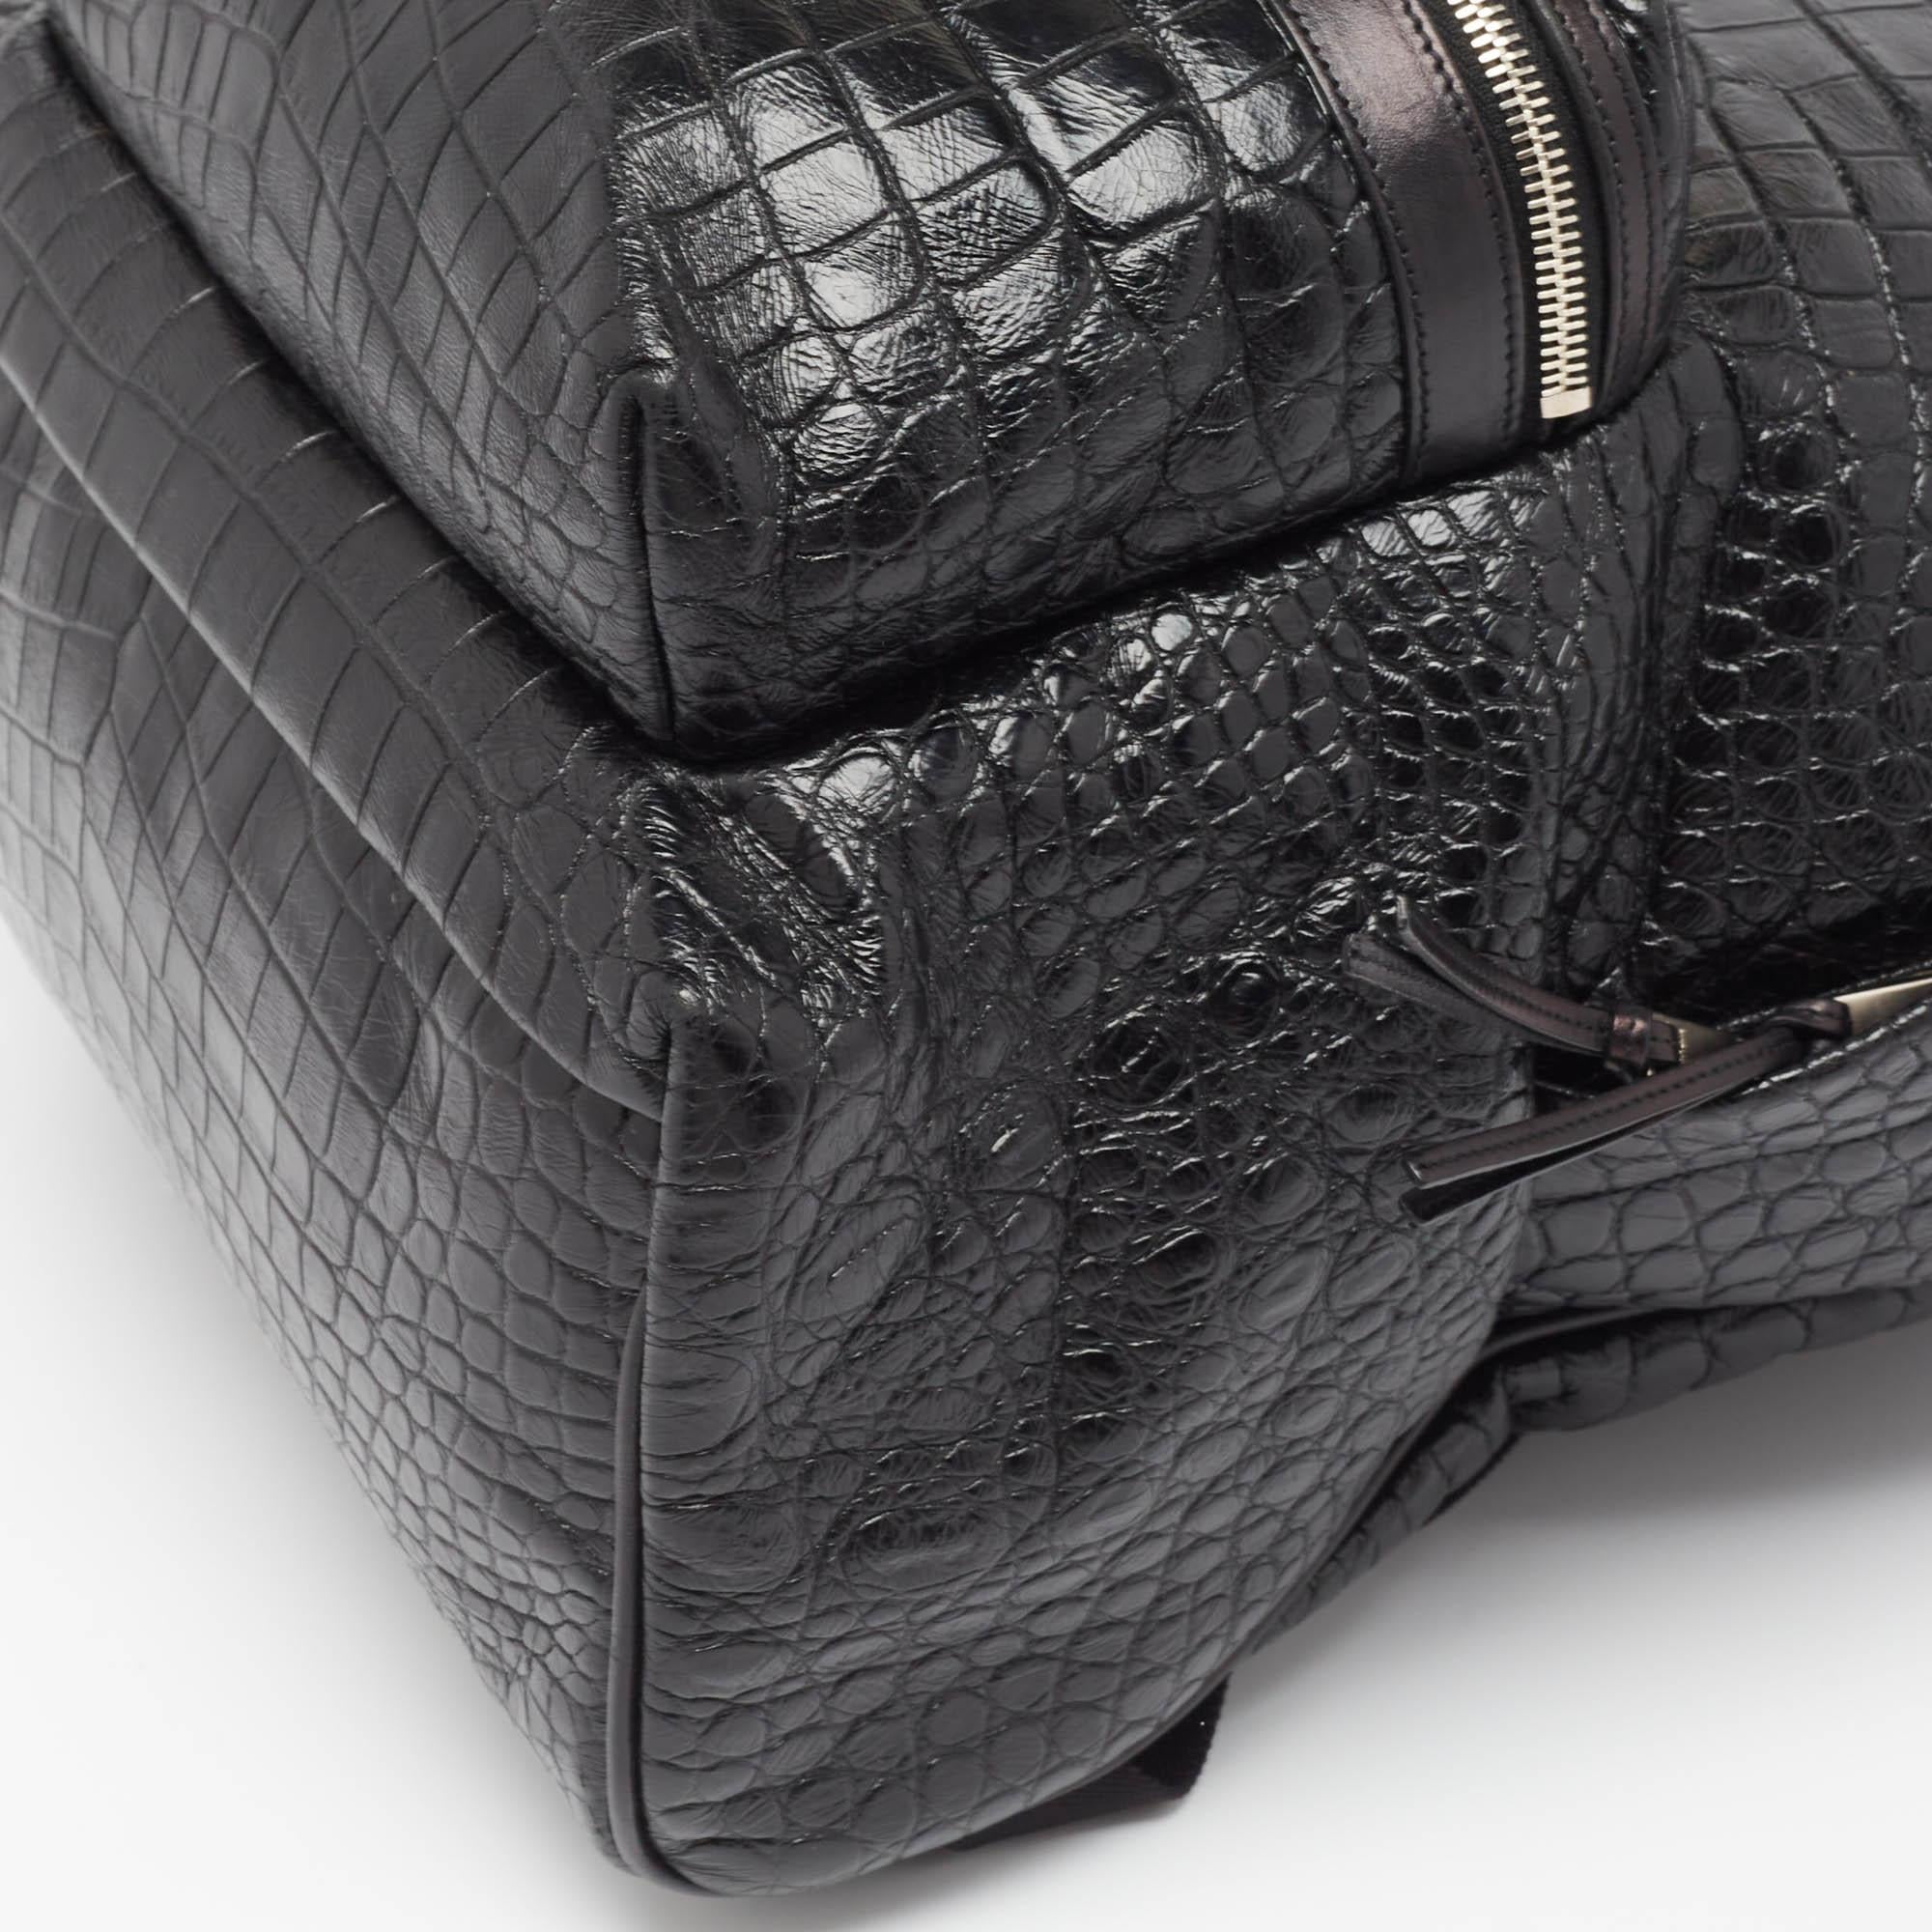  Saint Laurent Black Croc Embossed Leather City Backpack For Sale 3